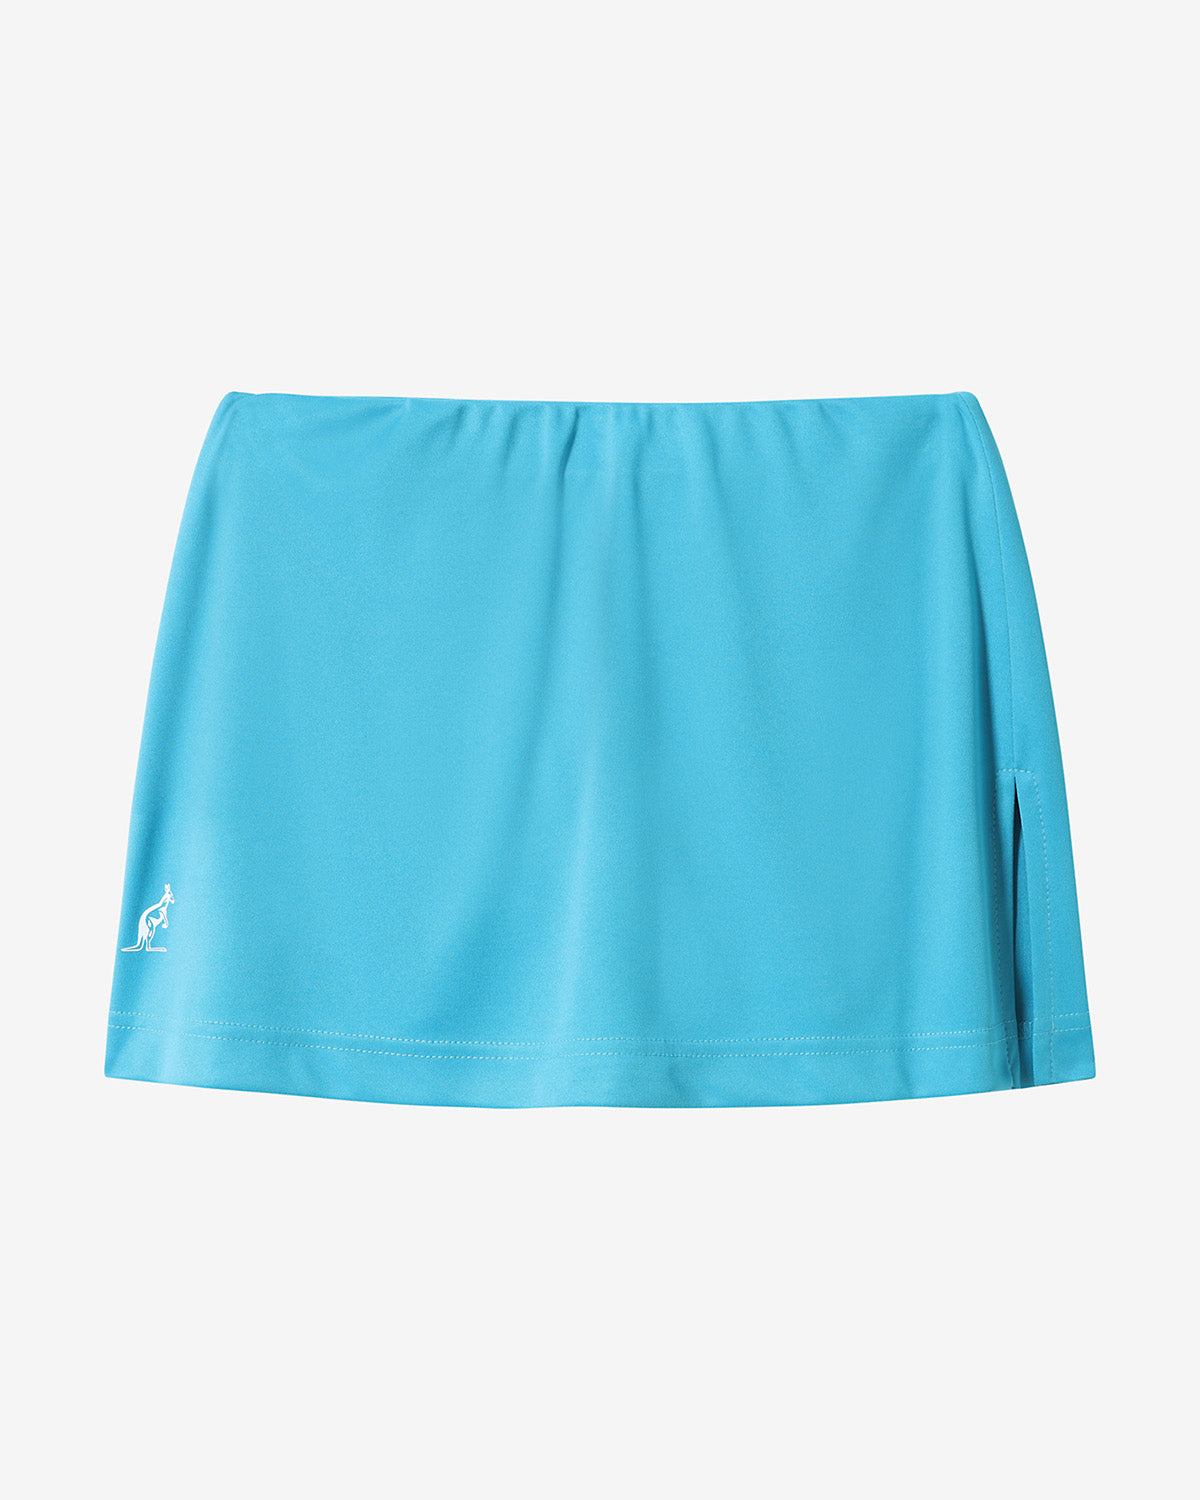 Ace Skirt: Australian Tennis